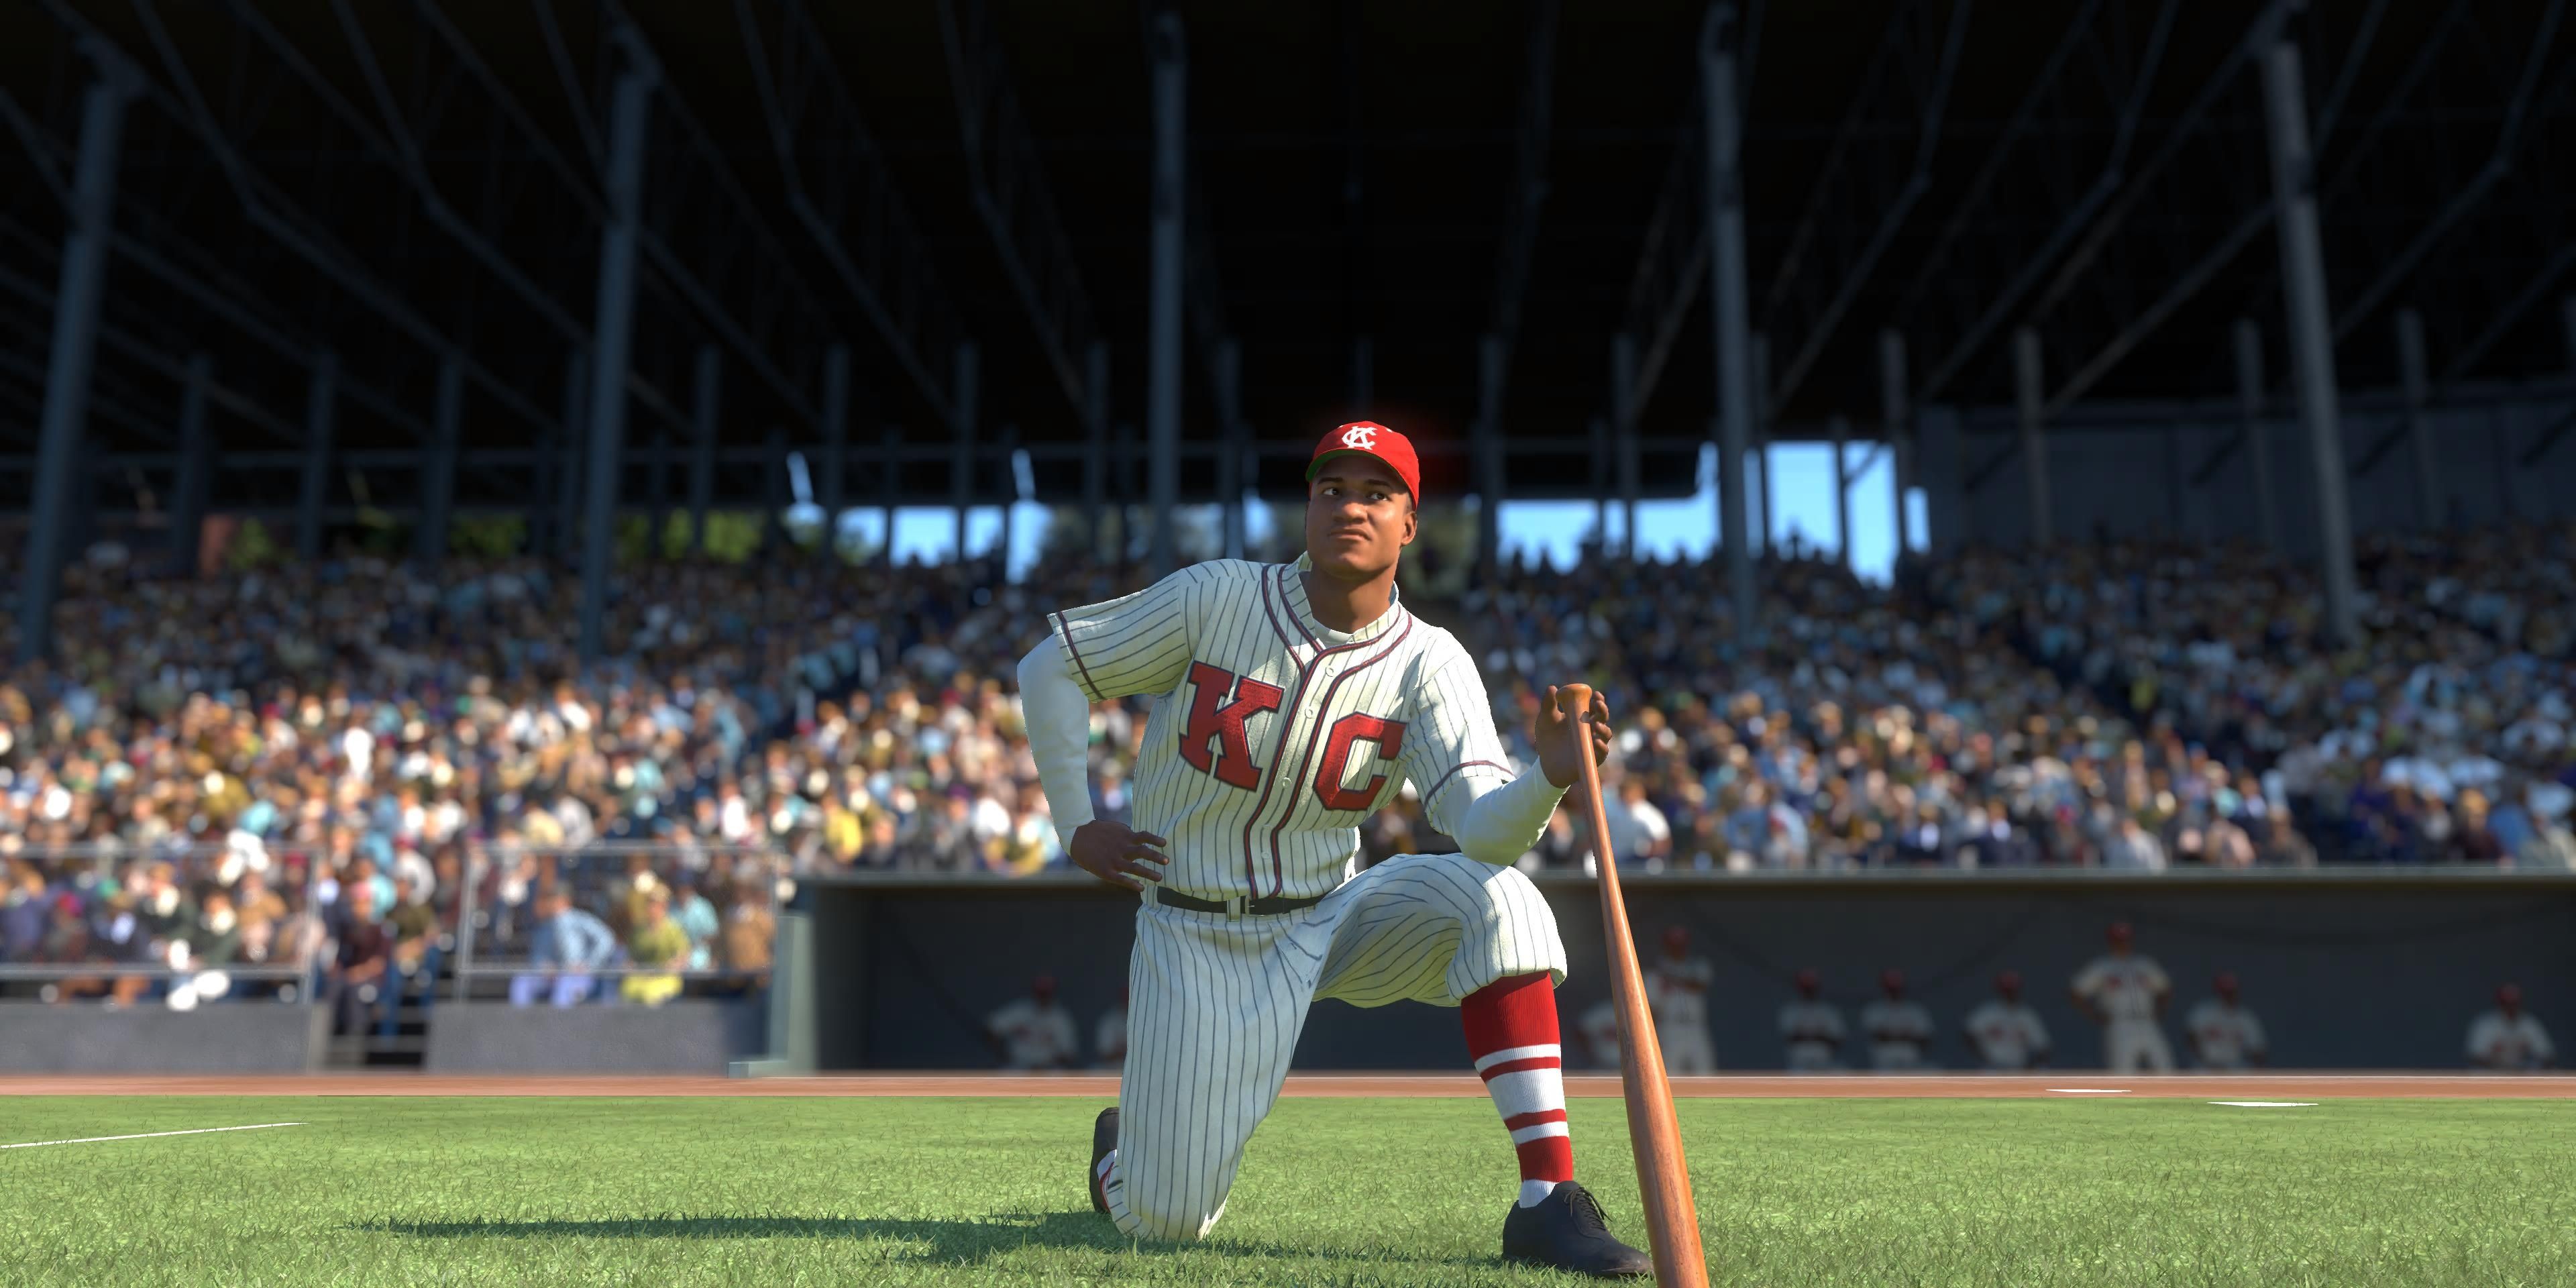 Hank Thompson kneeling on the side with bat